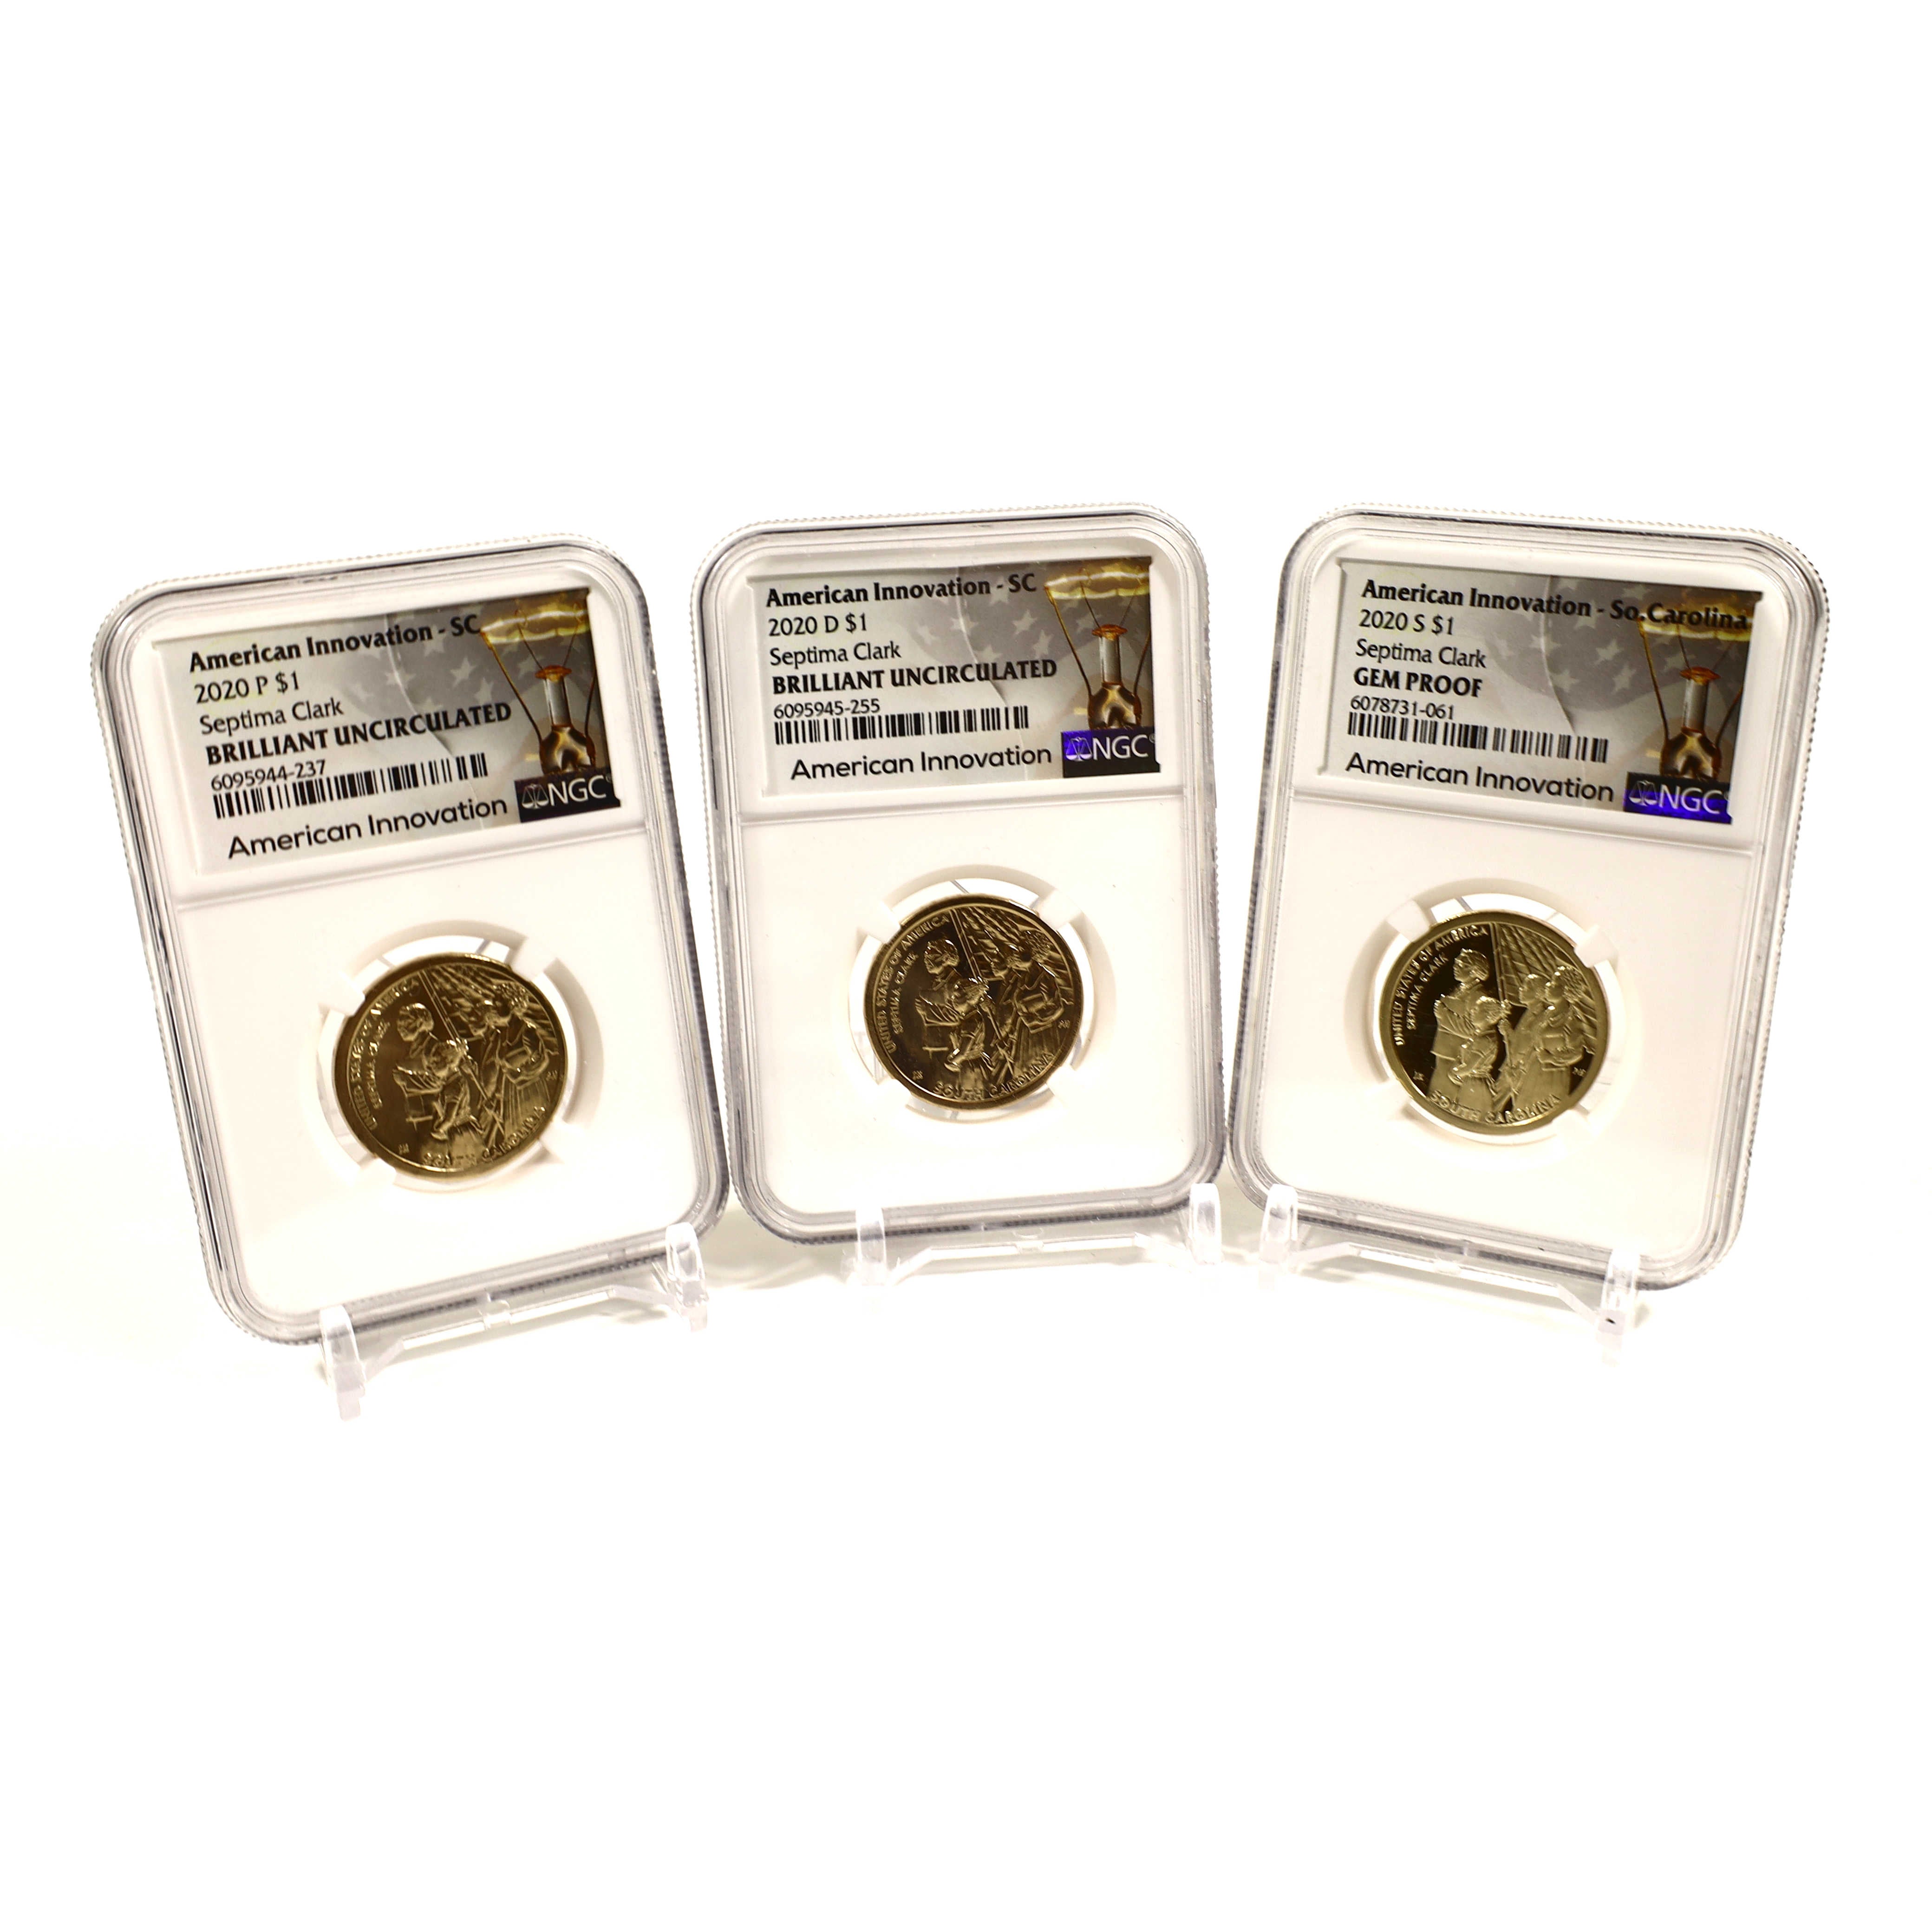 2020 SC Septima Clark Innovation Dollar 3 Coin PDS Set NGC SKU:CPC6623